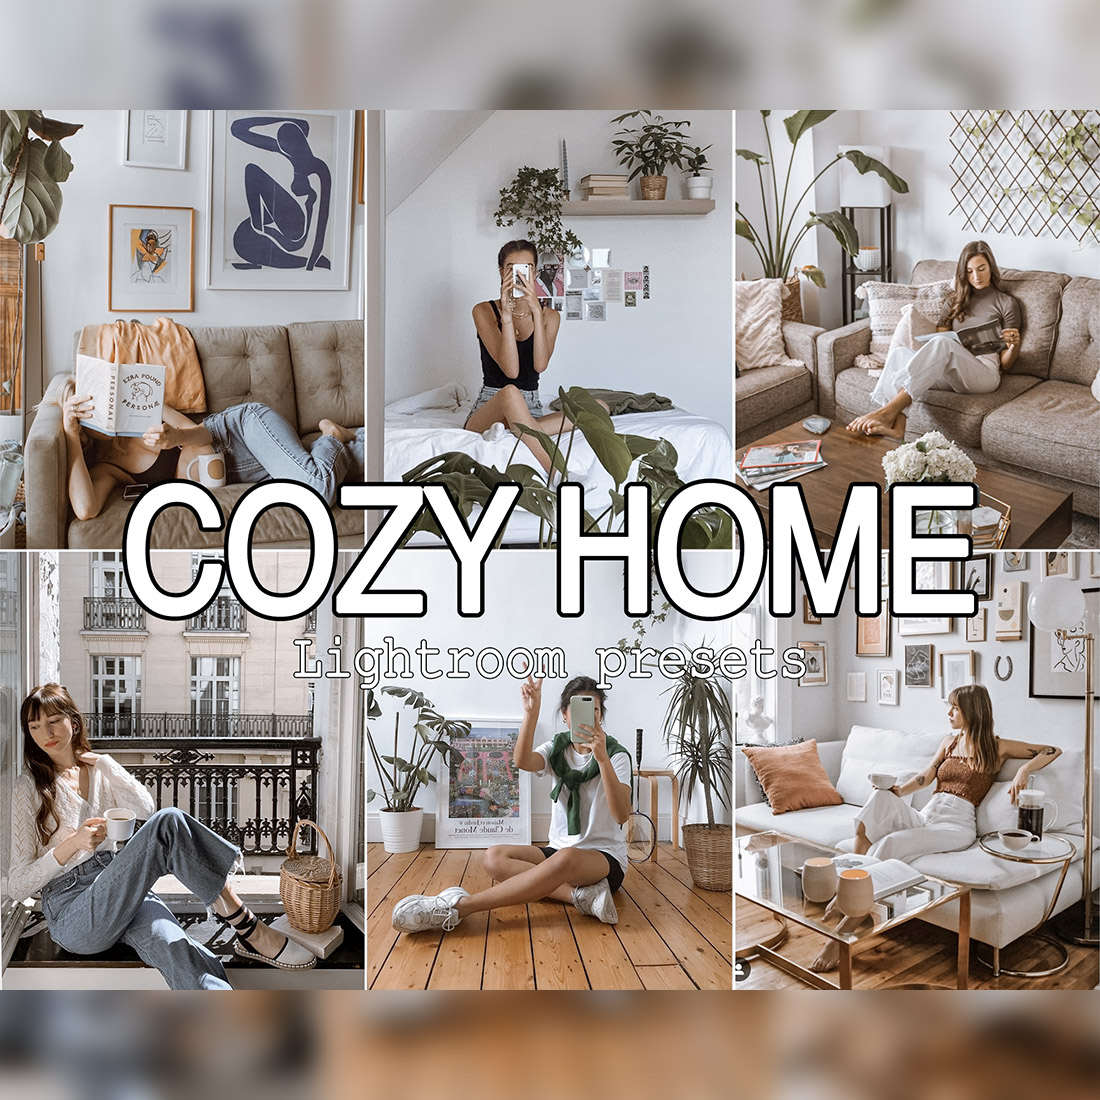 Cozy Home Mobile and Desktop Lightroom Presets cover image.